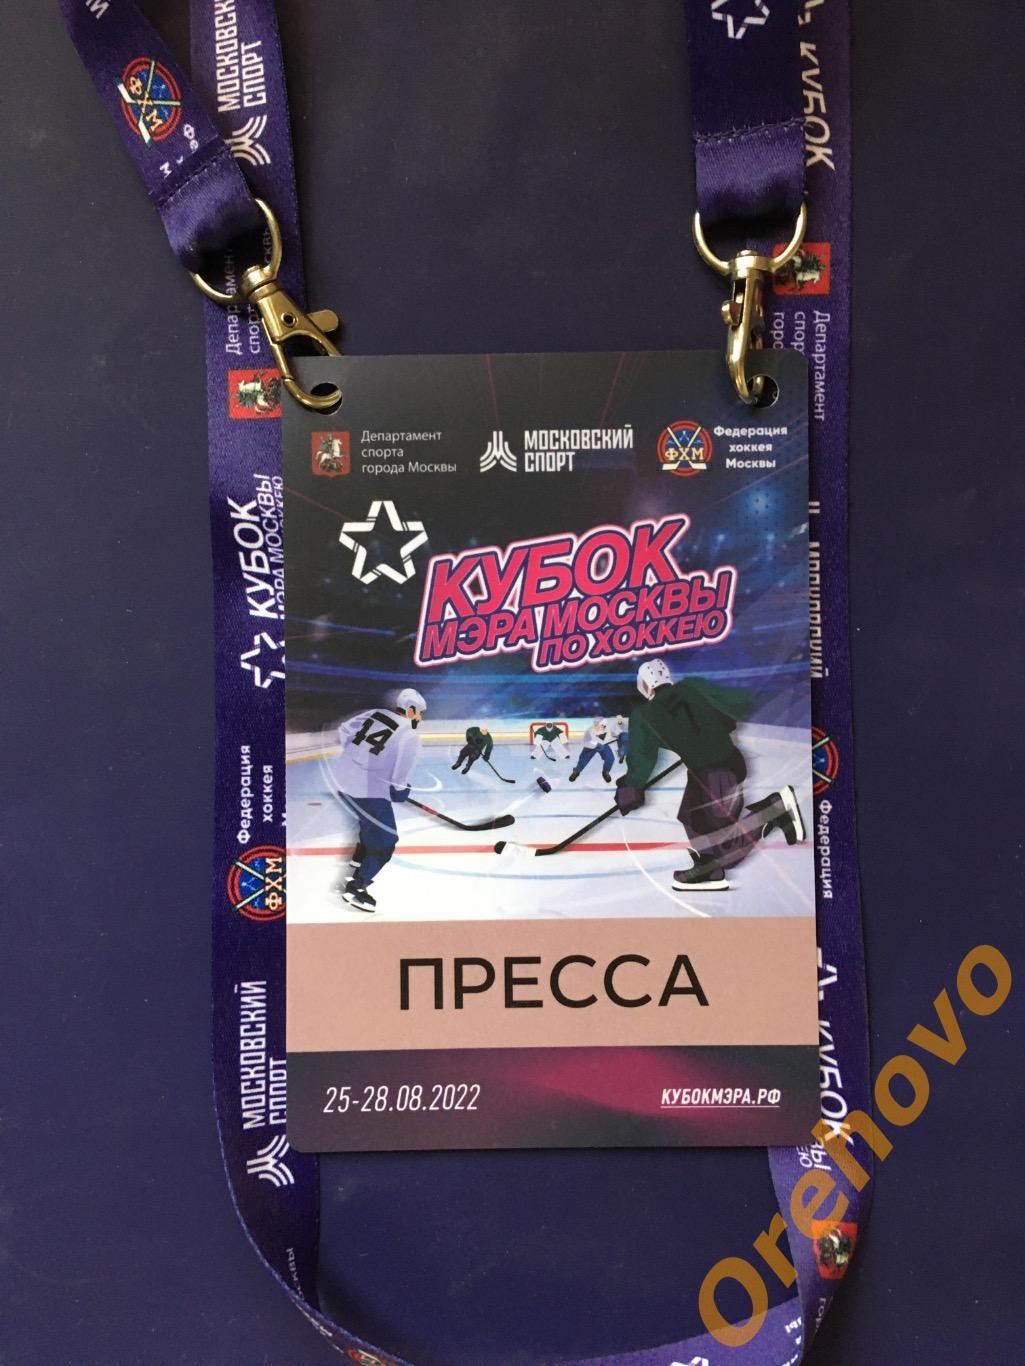 Кубок мэра Москвы по хоккею 2022 аккредитация